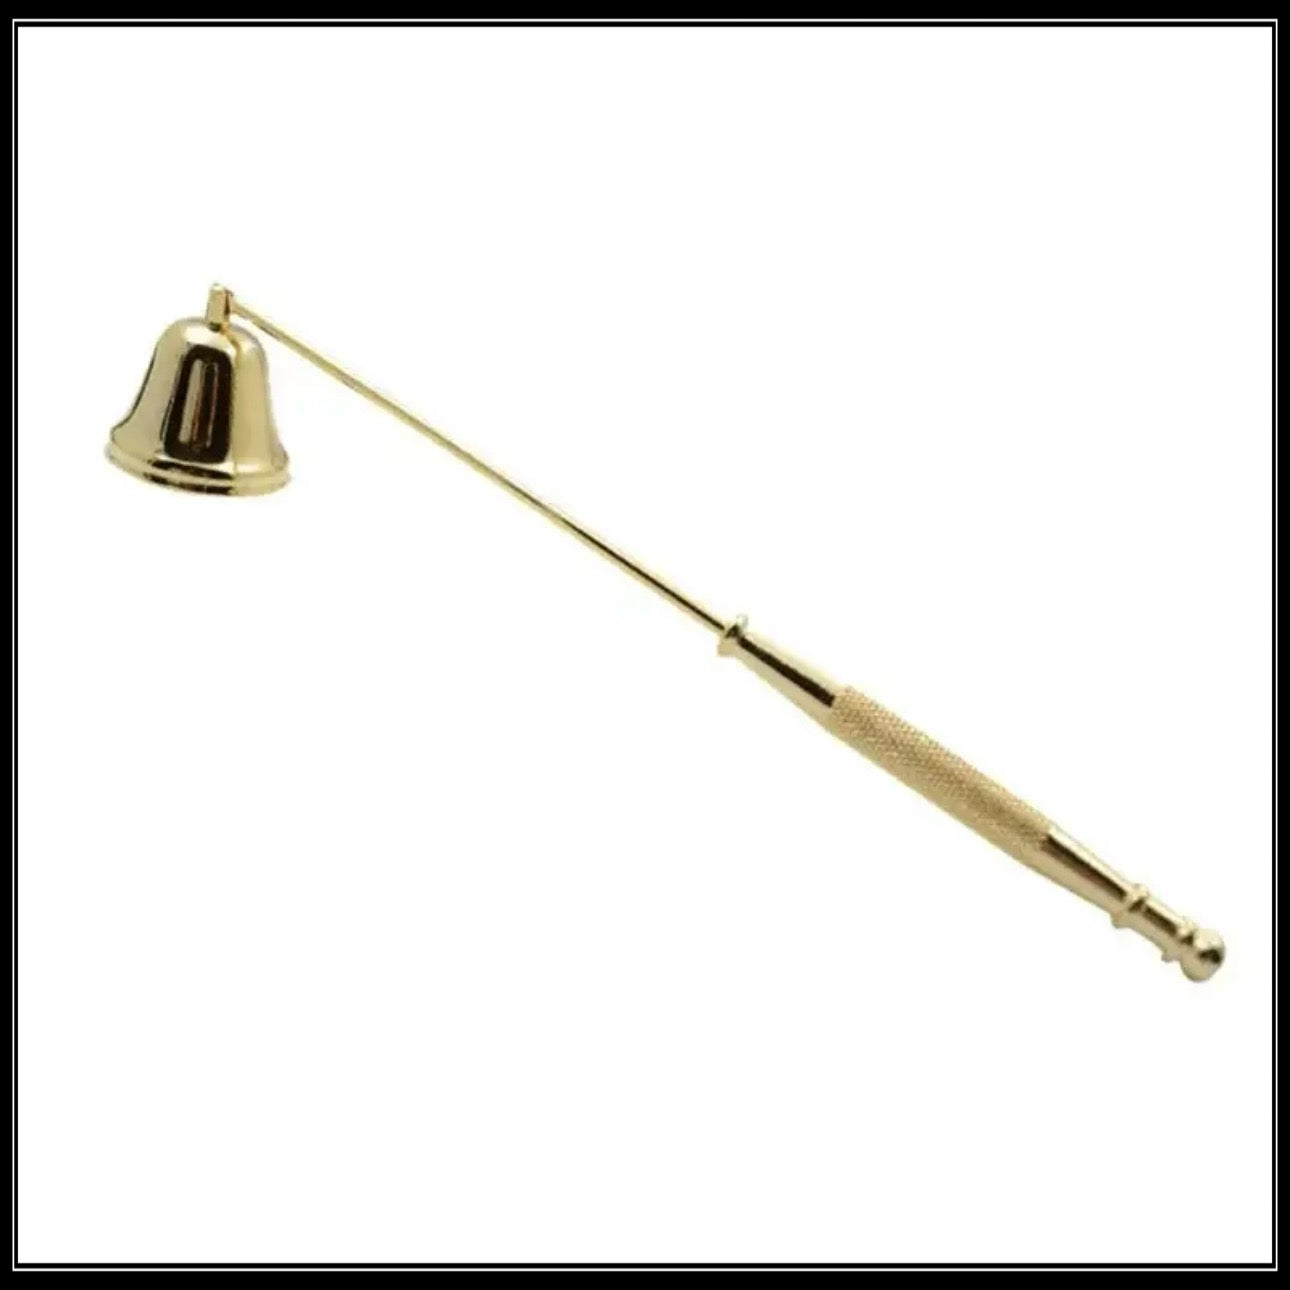 פעמון לכיבוי נר - bell tool candle